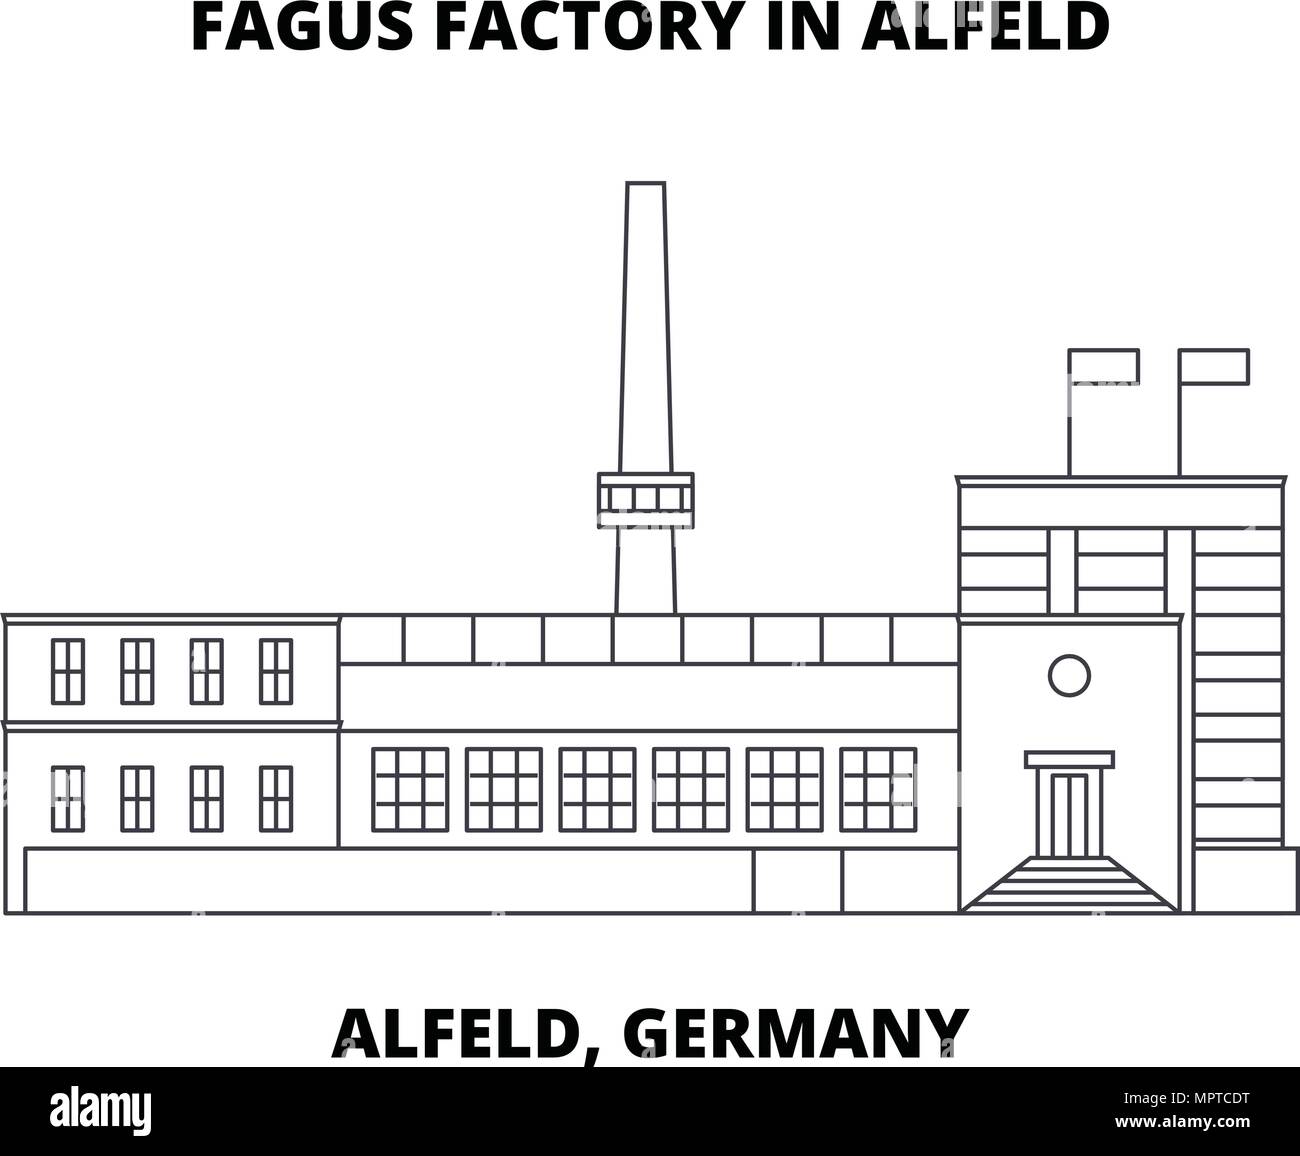 fagus factory plan